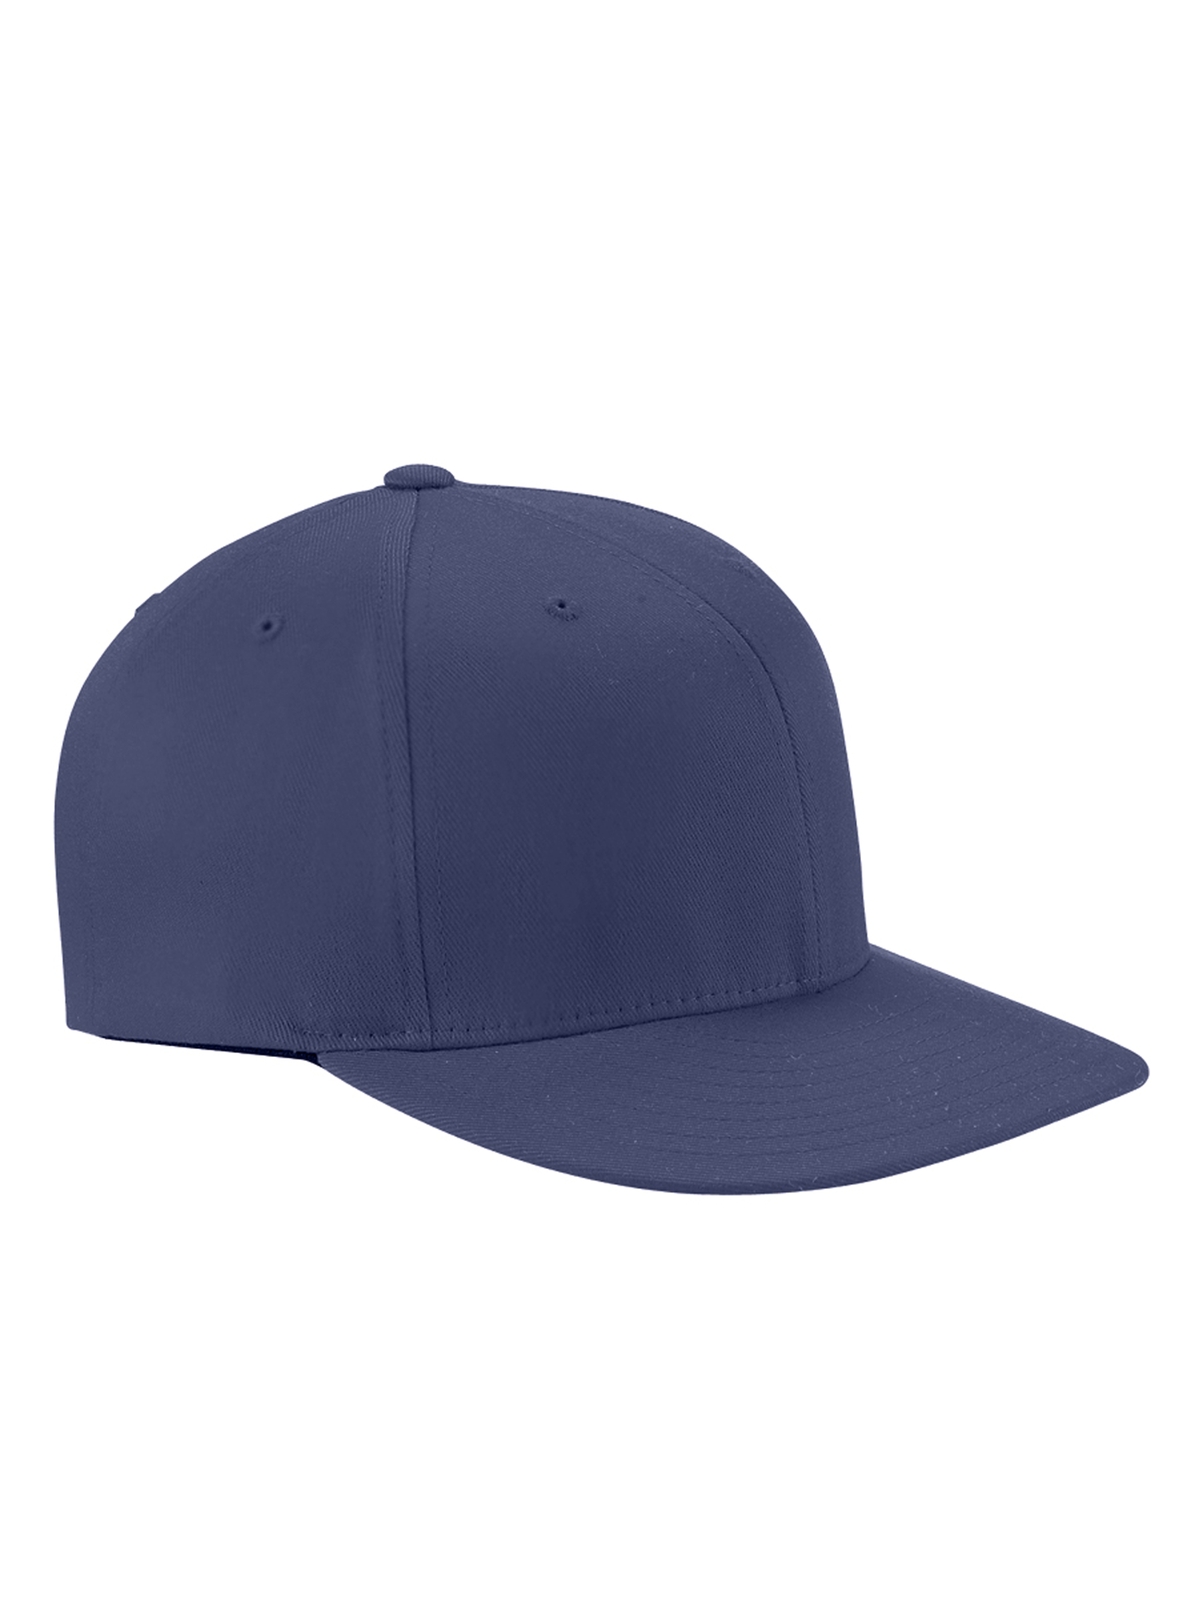 Flexfit Adult Wooly Twill Pro Baseball On-Field Shape Cap with Flat Bill - 6297F - image 1 of 1